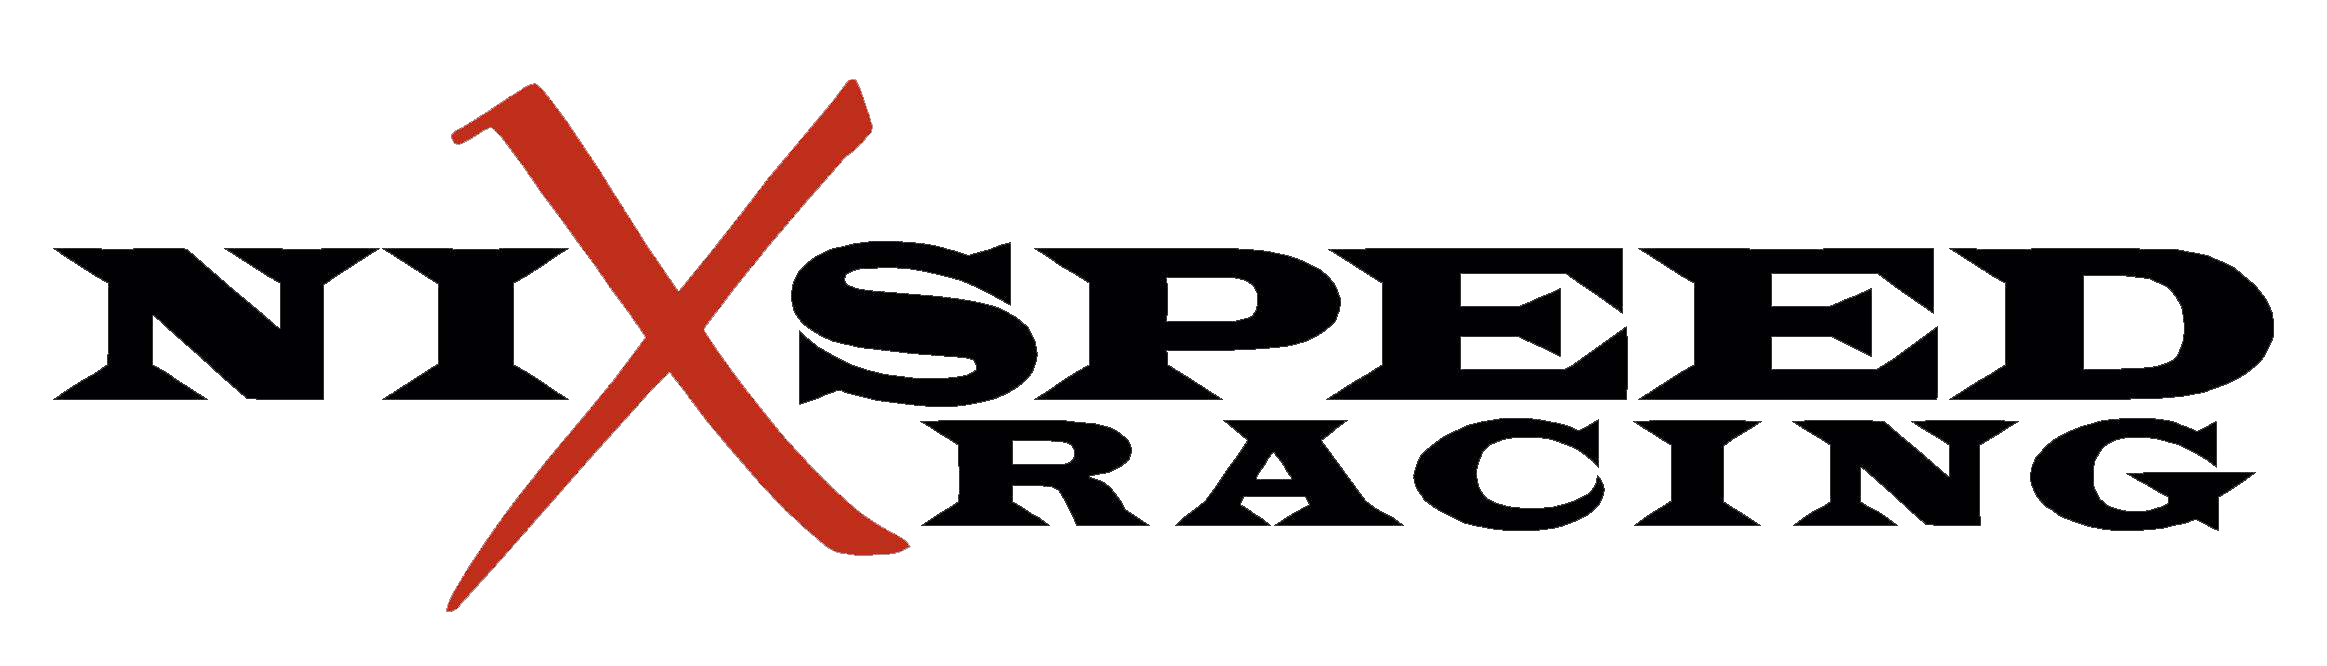 Nixspeed Racing